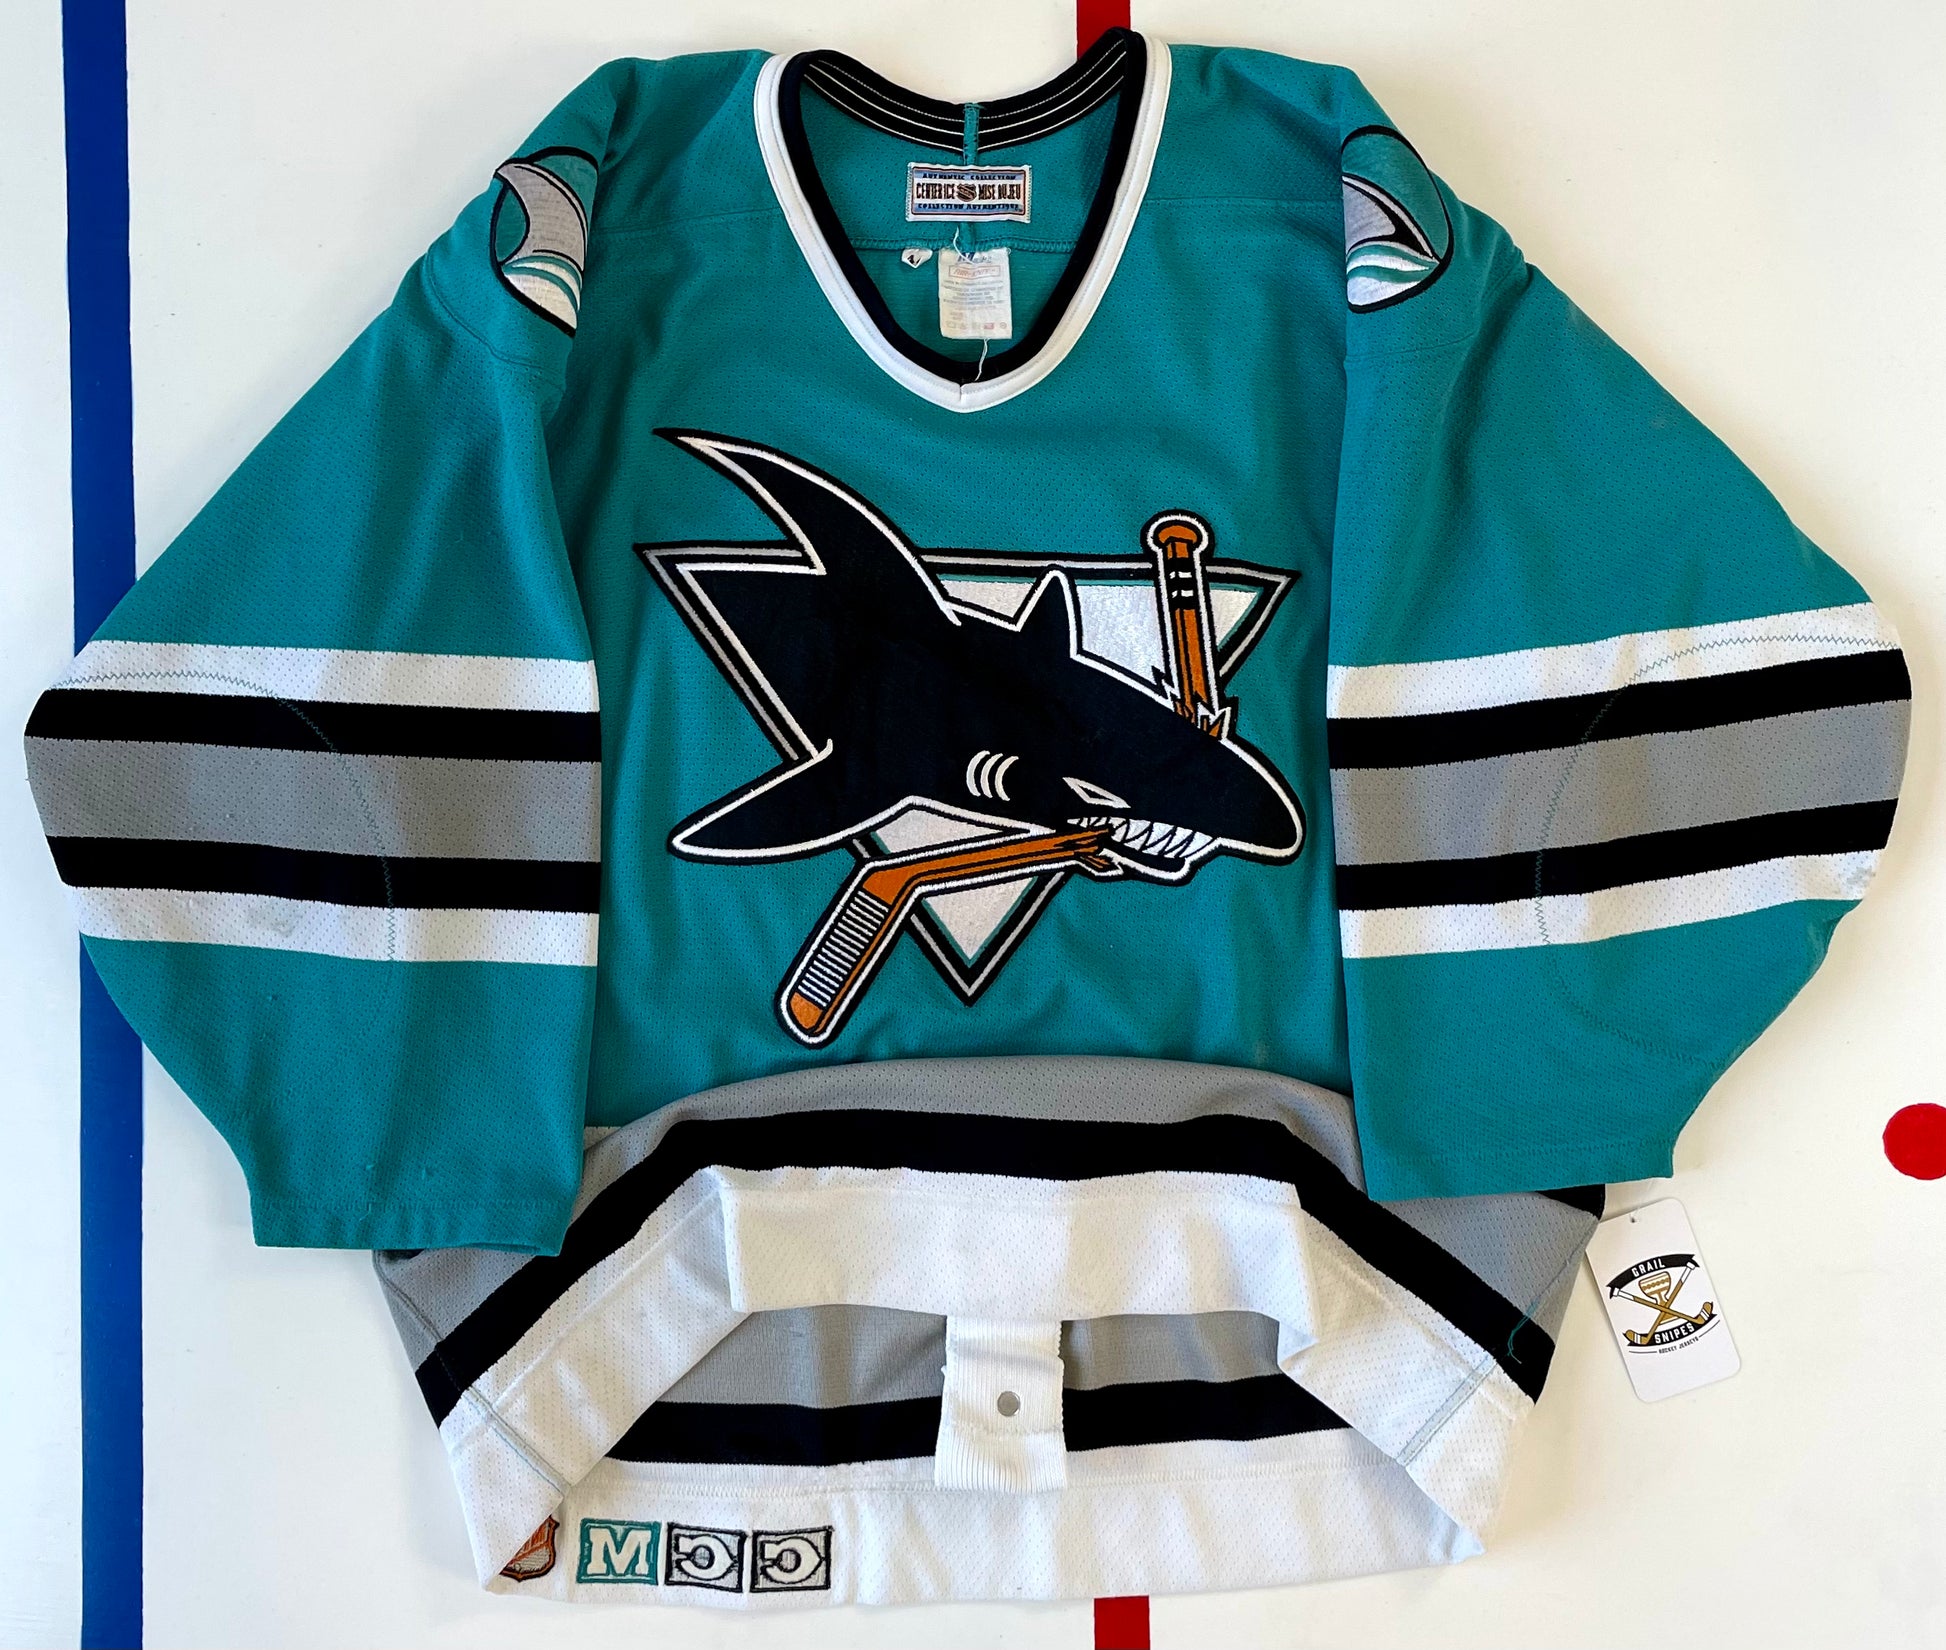 Vintage 1991 San Jose Sharks Home White CCM Jerseys! Misc sizes!